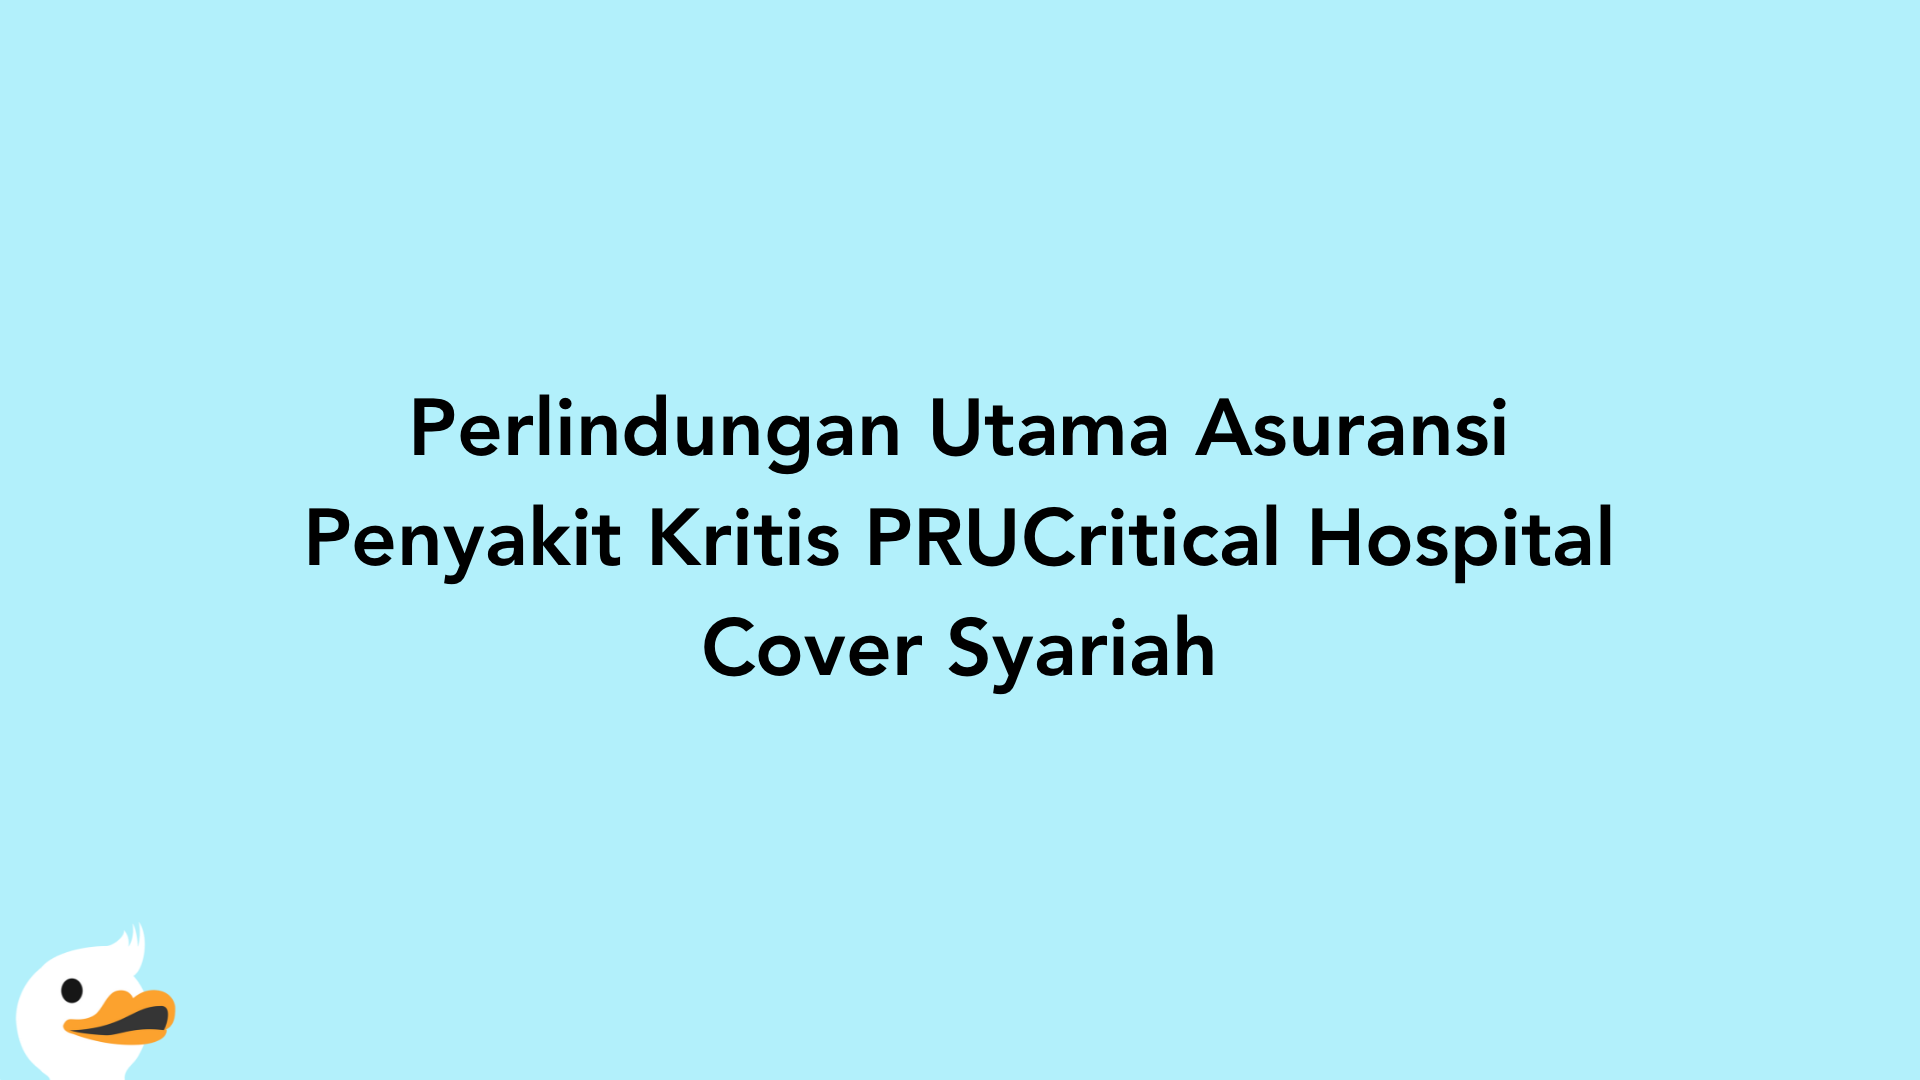 Perlindungan Utama Asuransi Penyakit Kritis PRUCritical Hospital Cover Syariah